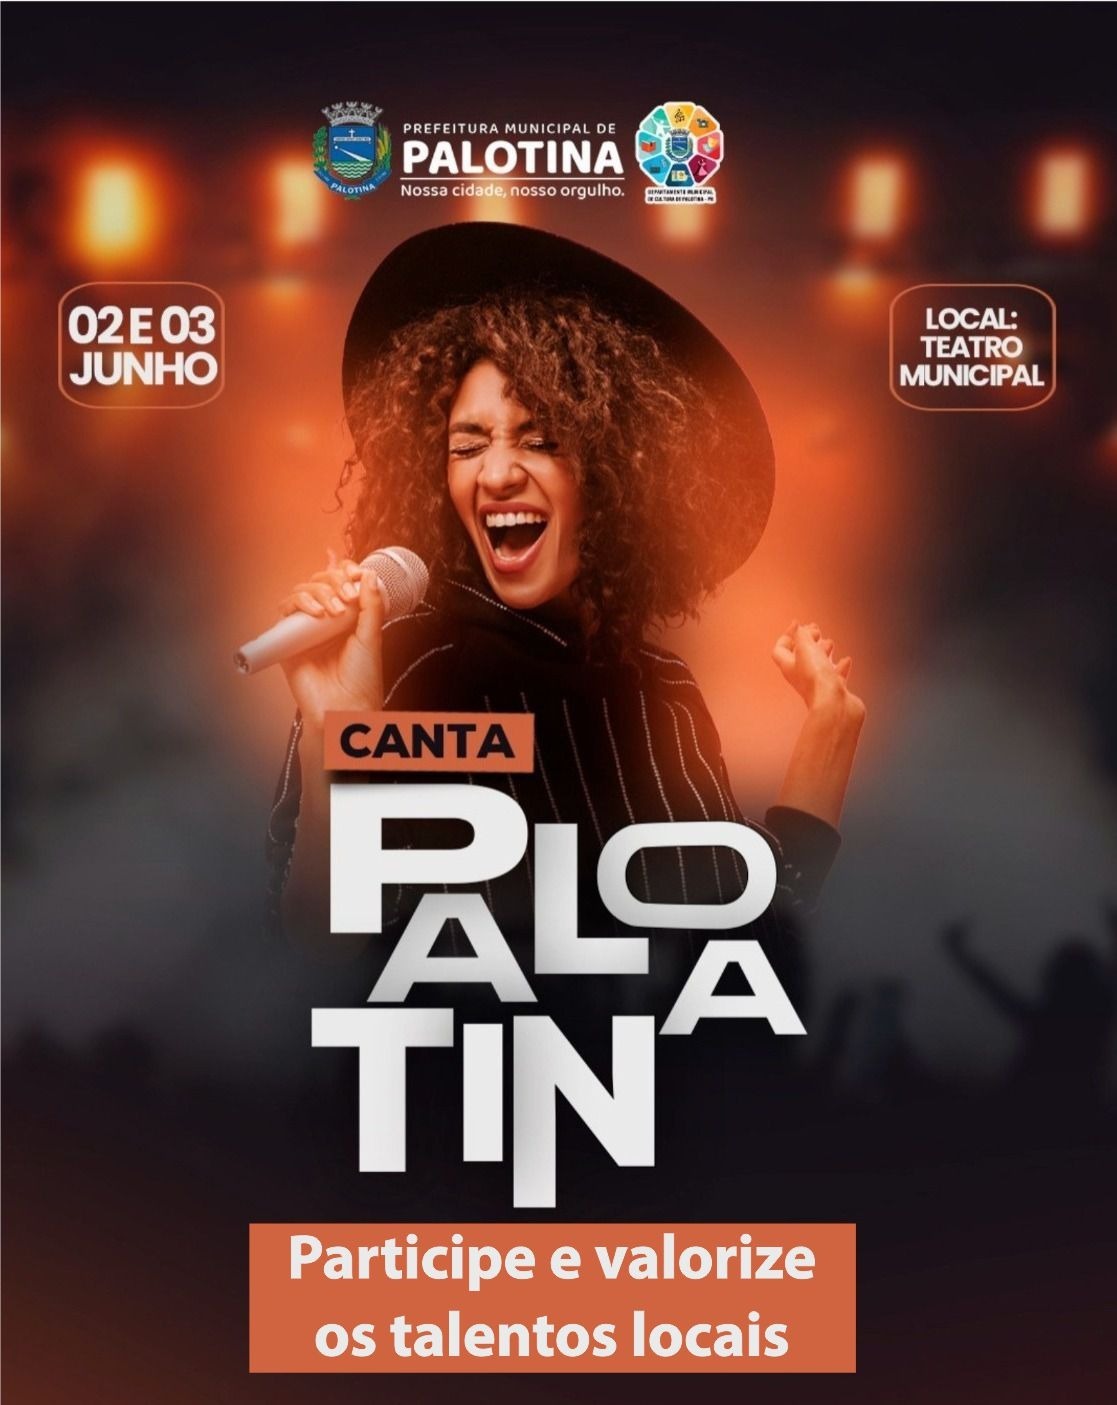 Festival de Música Canta Palotina acontece nos dias 02 e 03 de junho